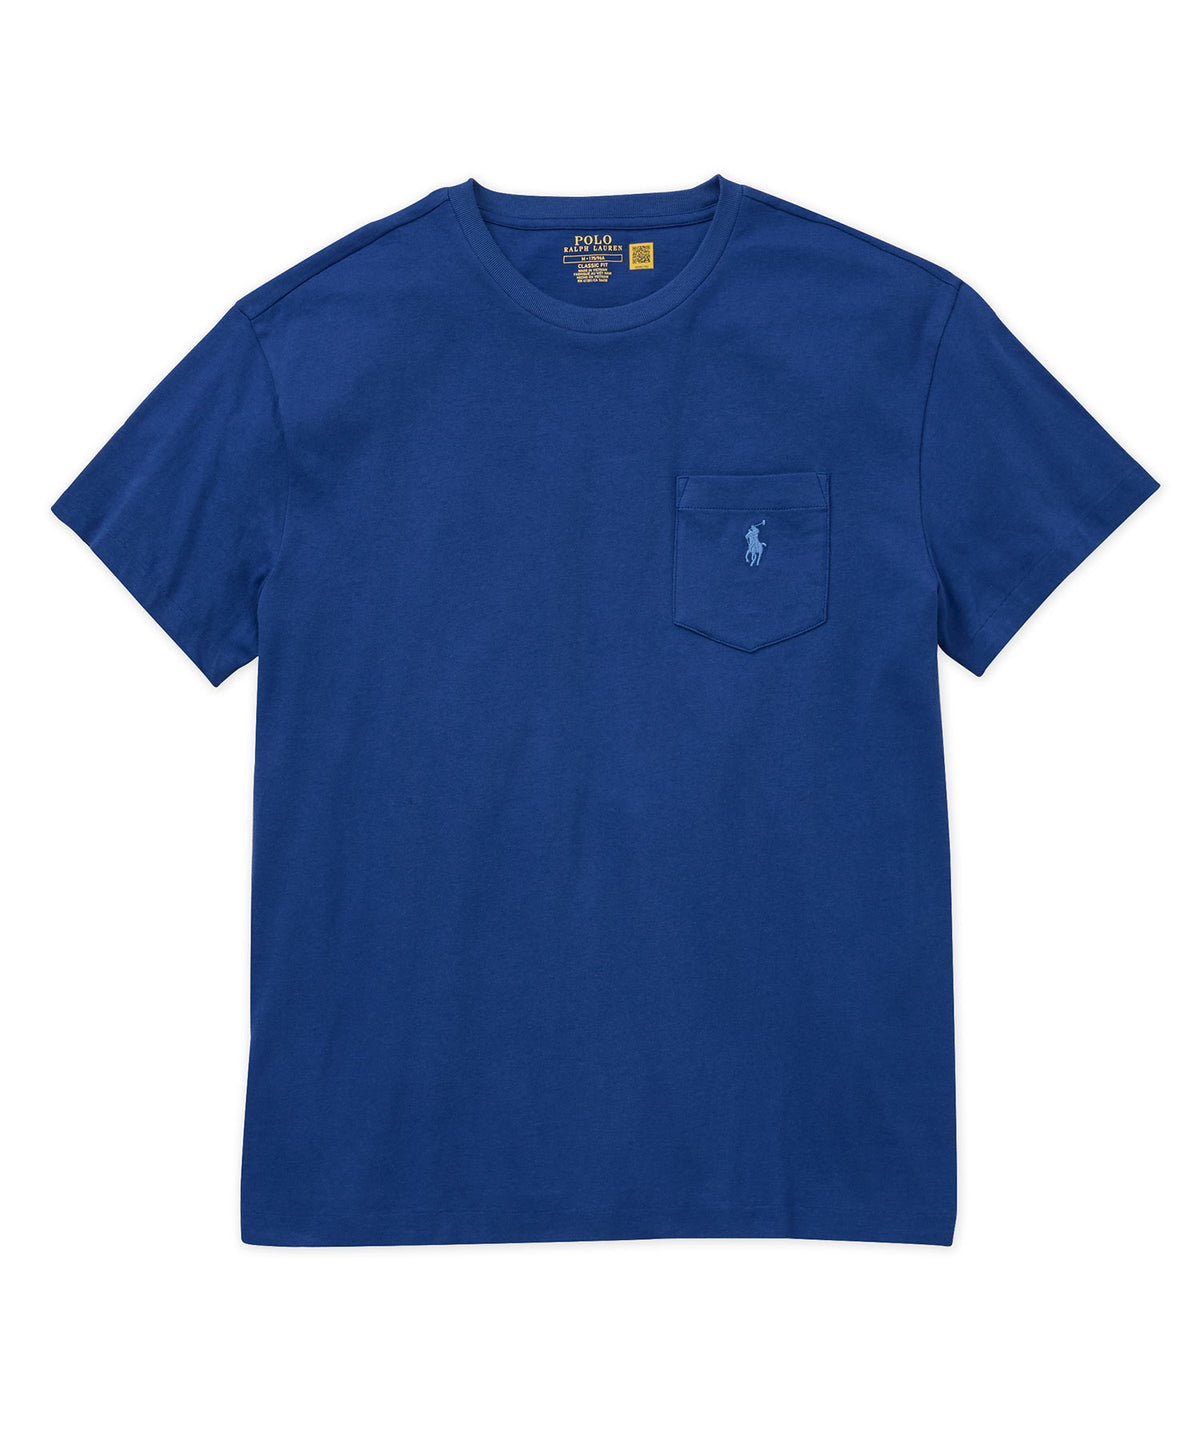 Polo Ralph Lauren Short Sleeve Solid Pocket Crewneck Tee Shirt